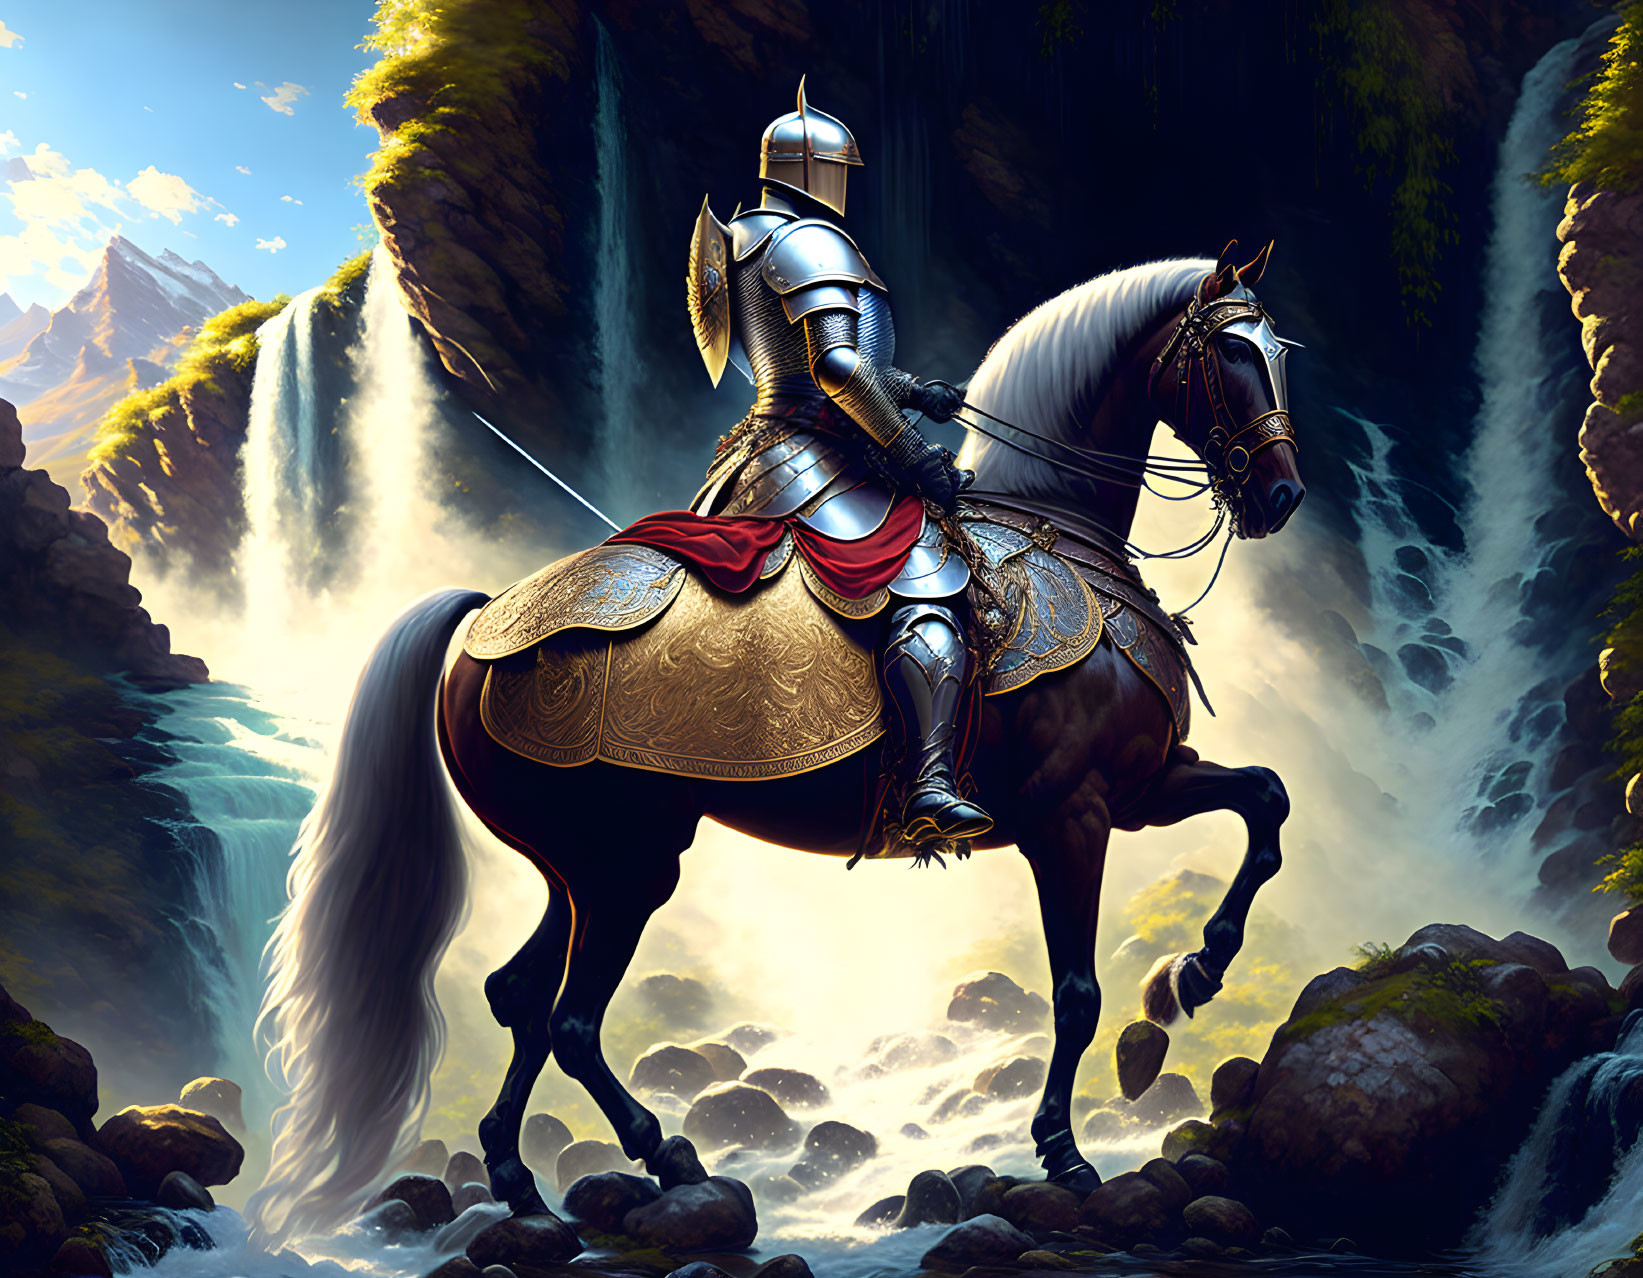 Knight in full armor on white horse near waterfall in lush scenery